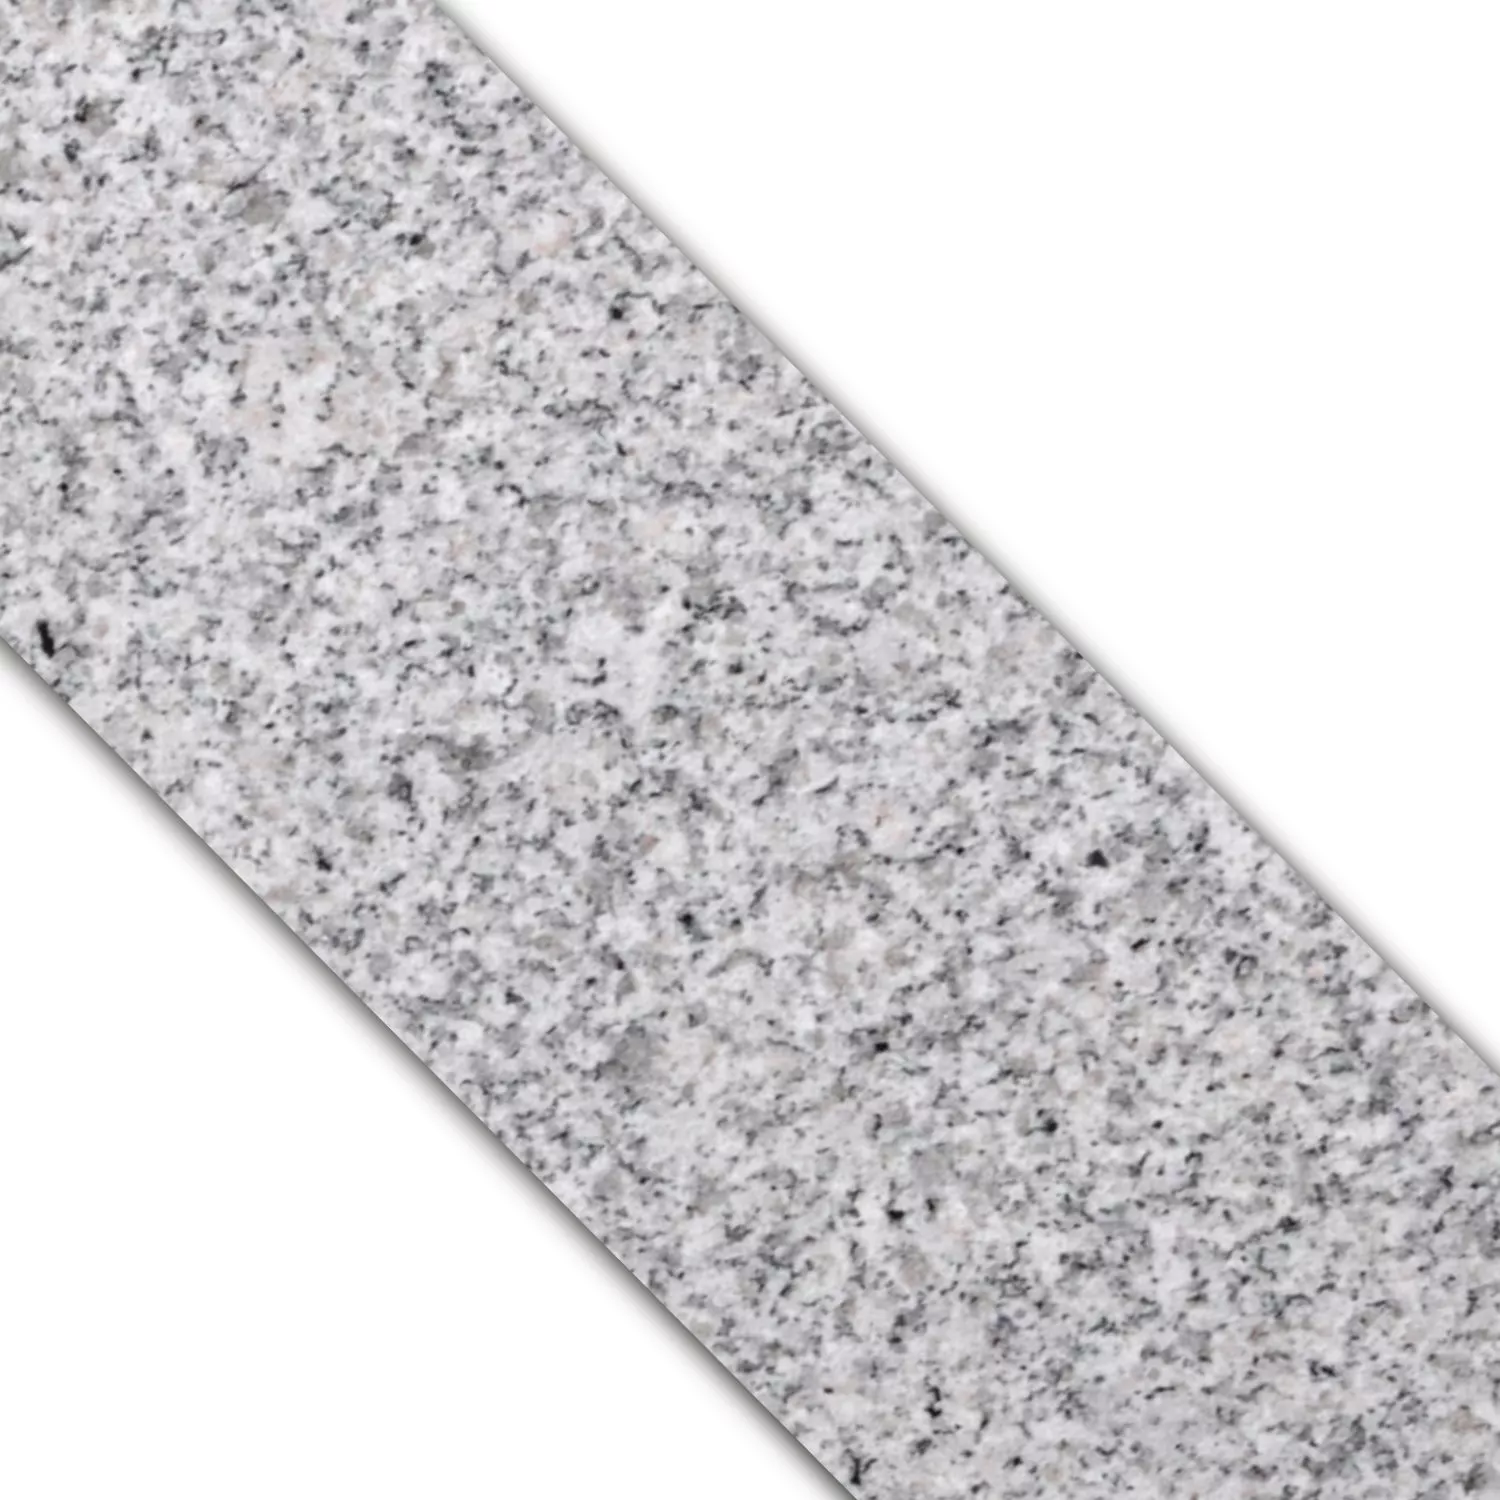 Natursteen Tegels Granit Plint China Grey Gegolfd